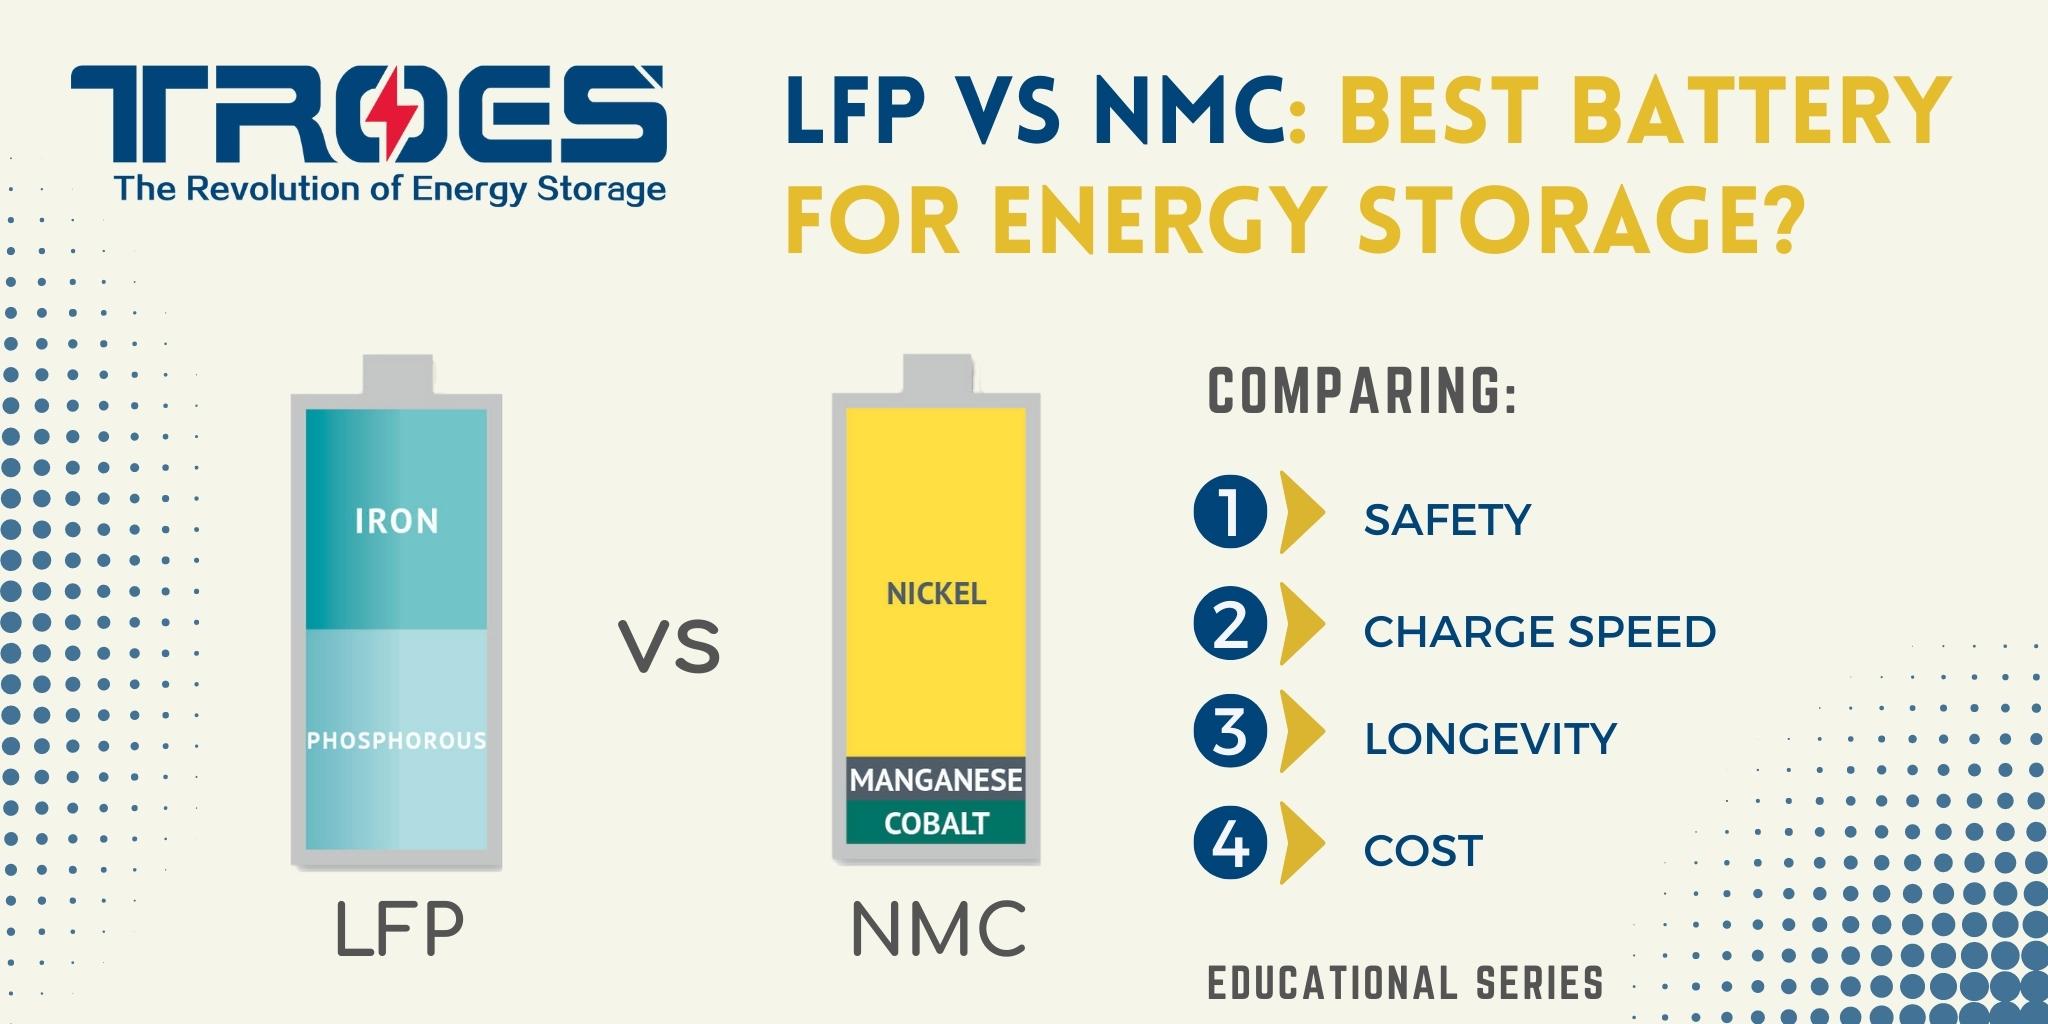 LFP vs NMC: Best Battery for Energy Storage?